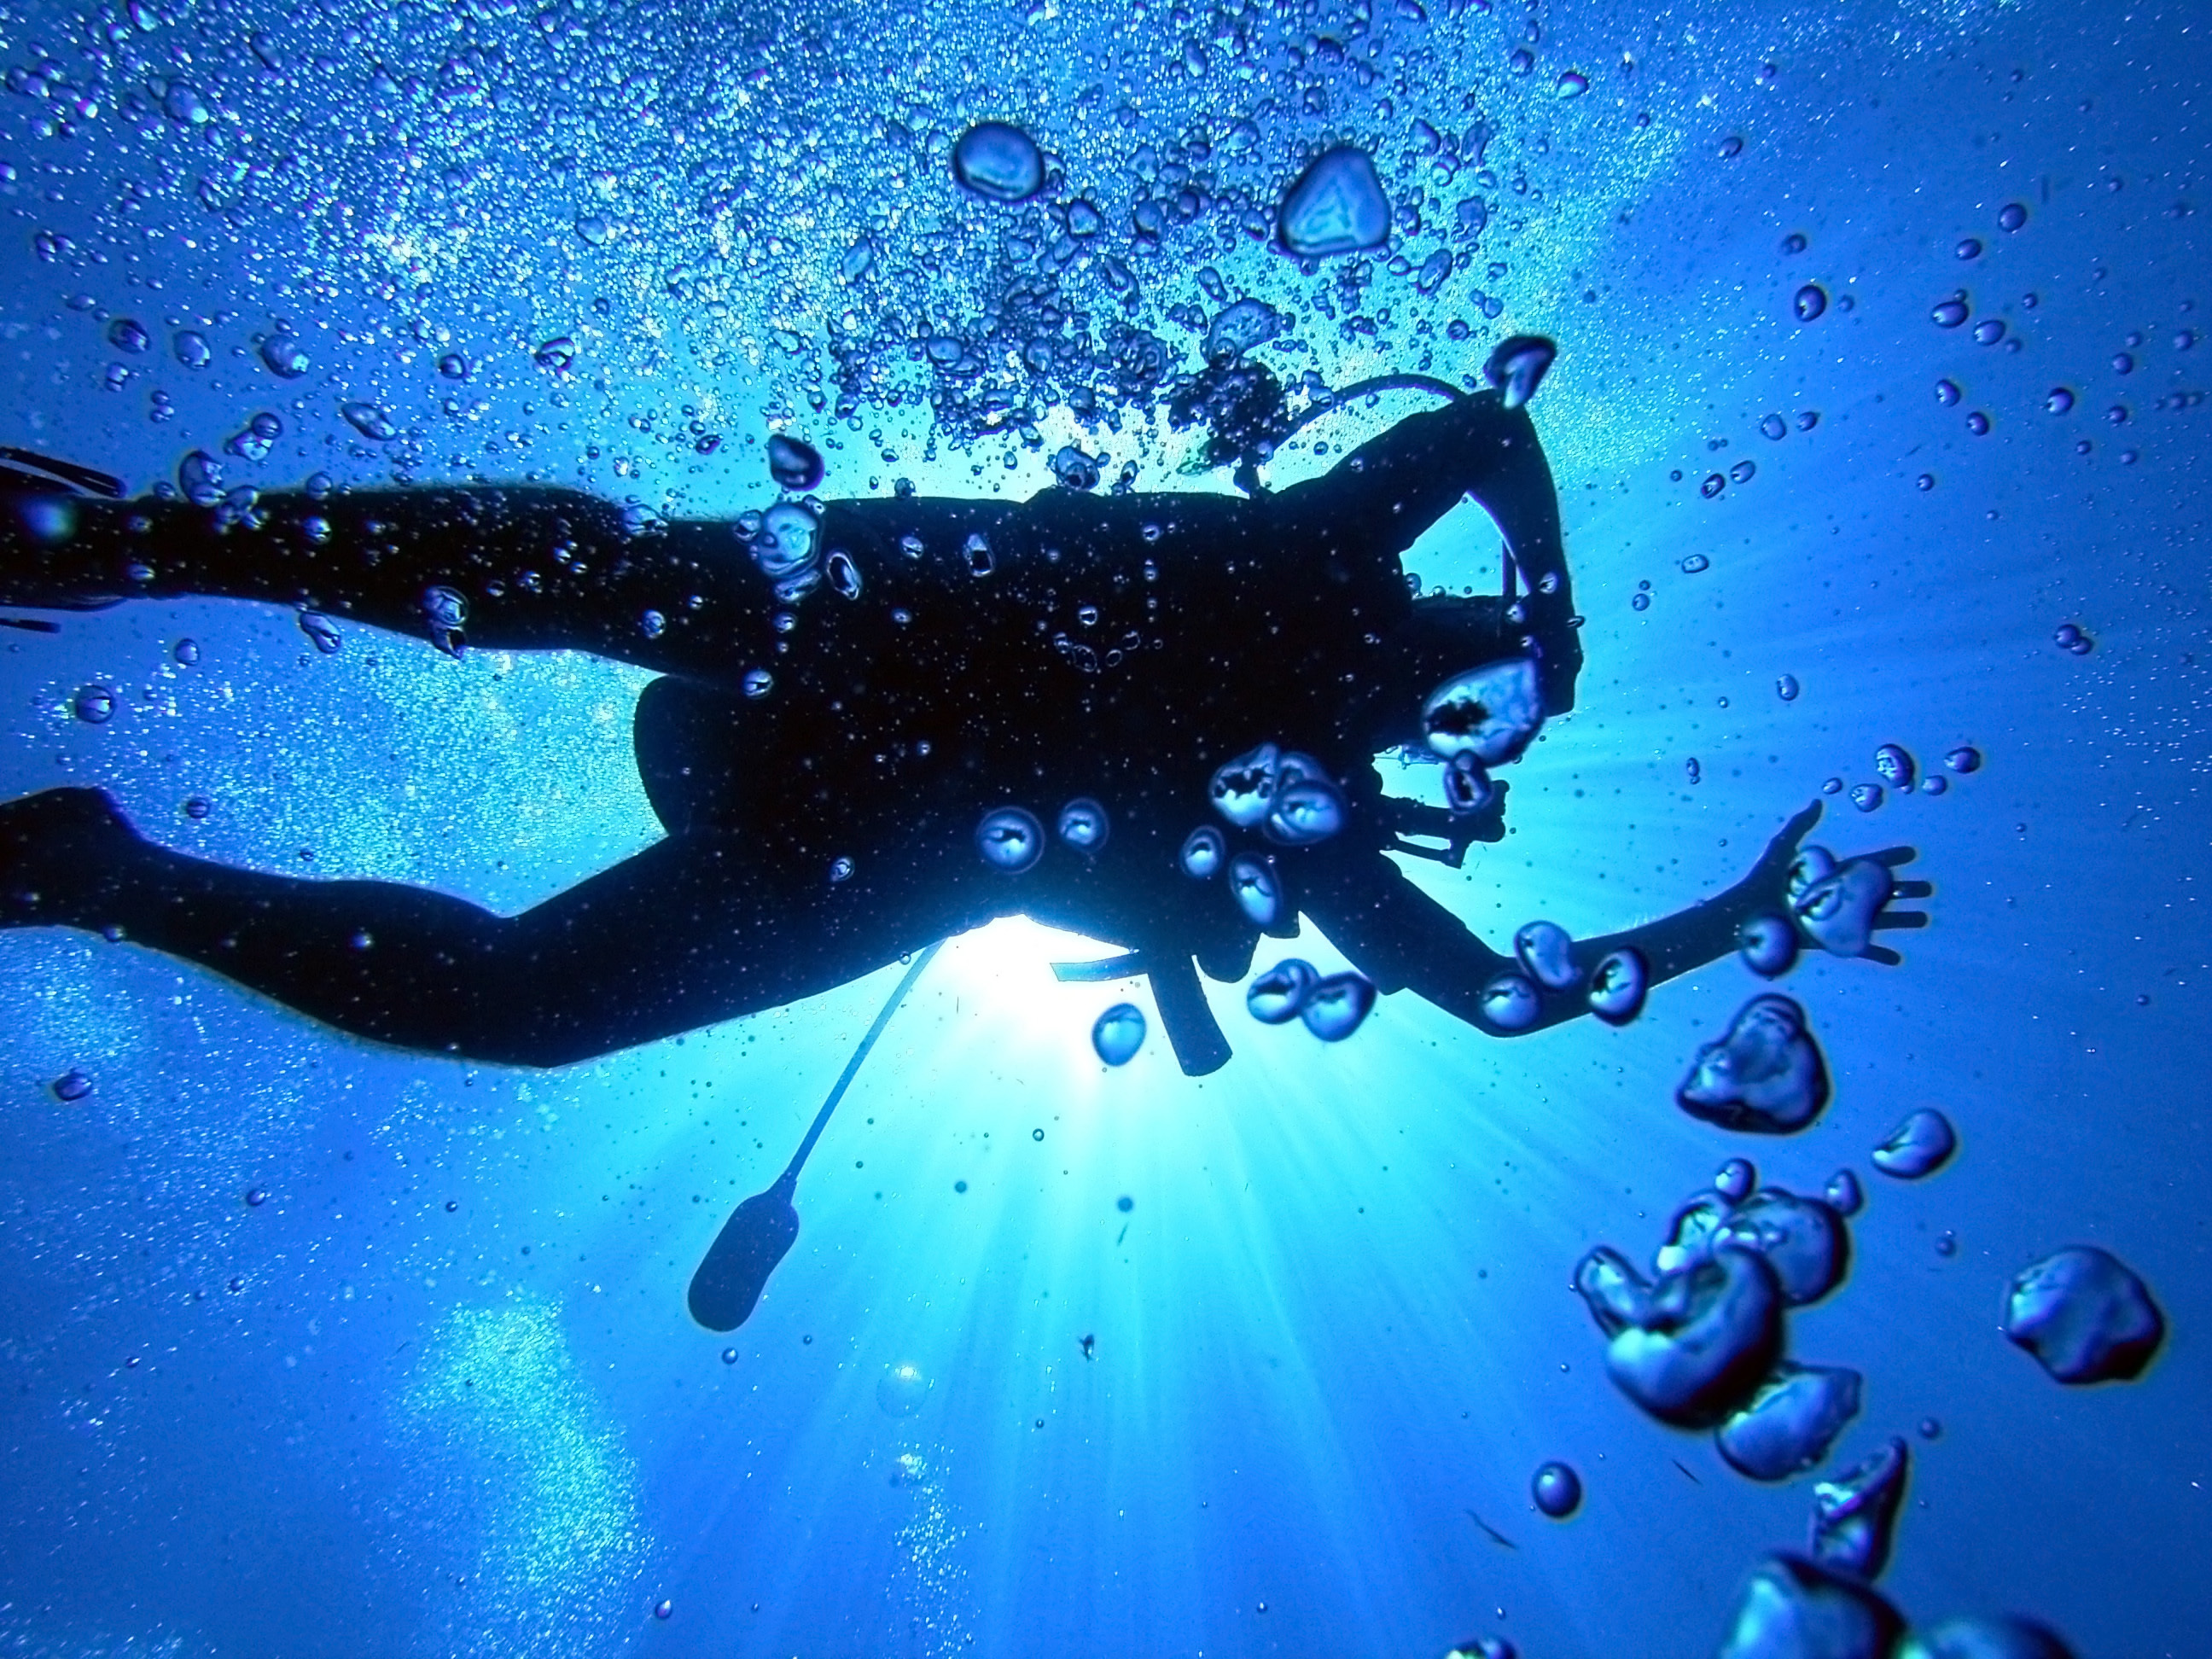 Underwater Exploration: Scuba Diving HD Wallpaper by QuantumCurator